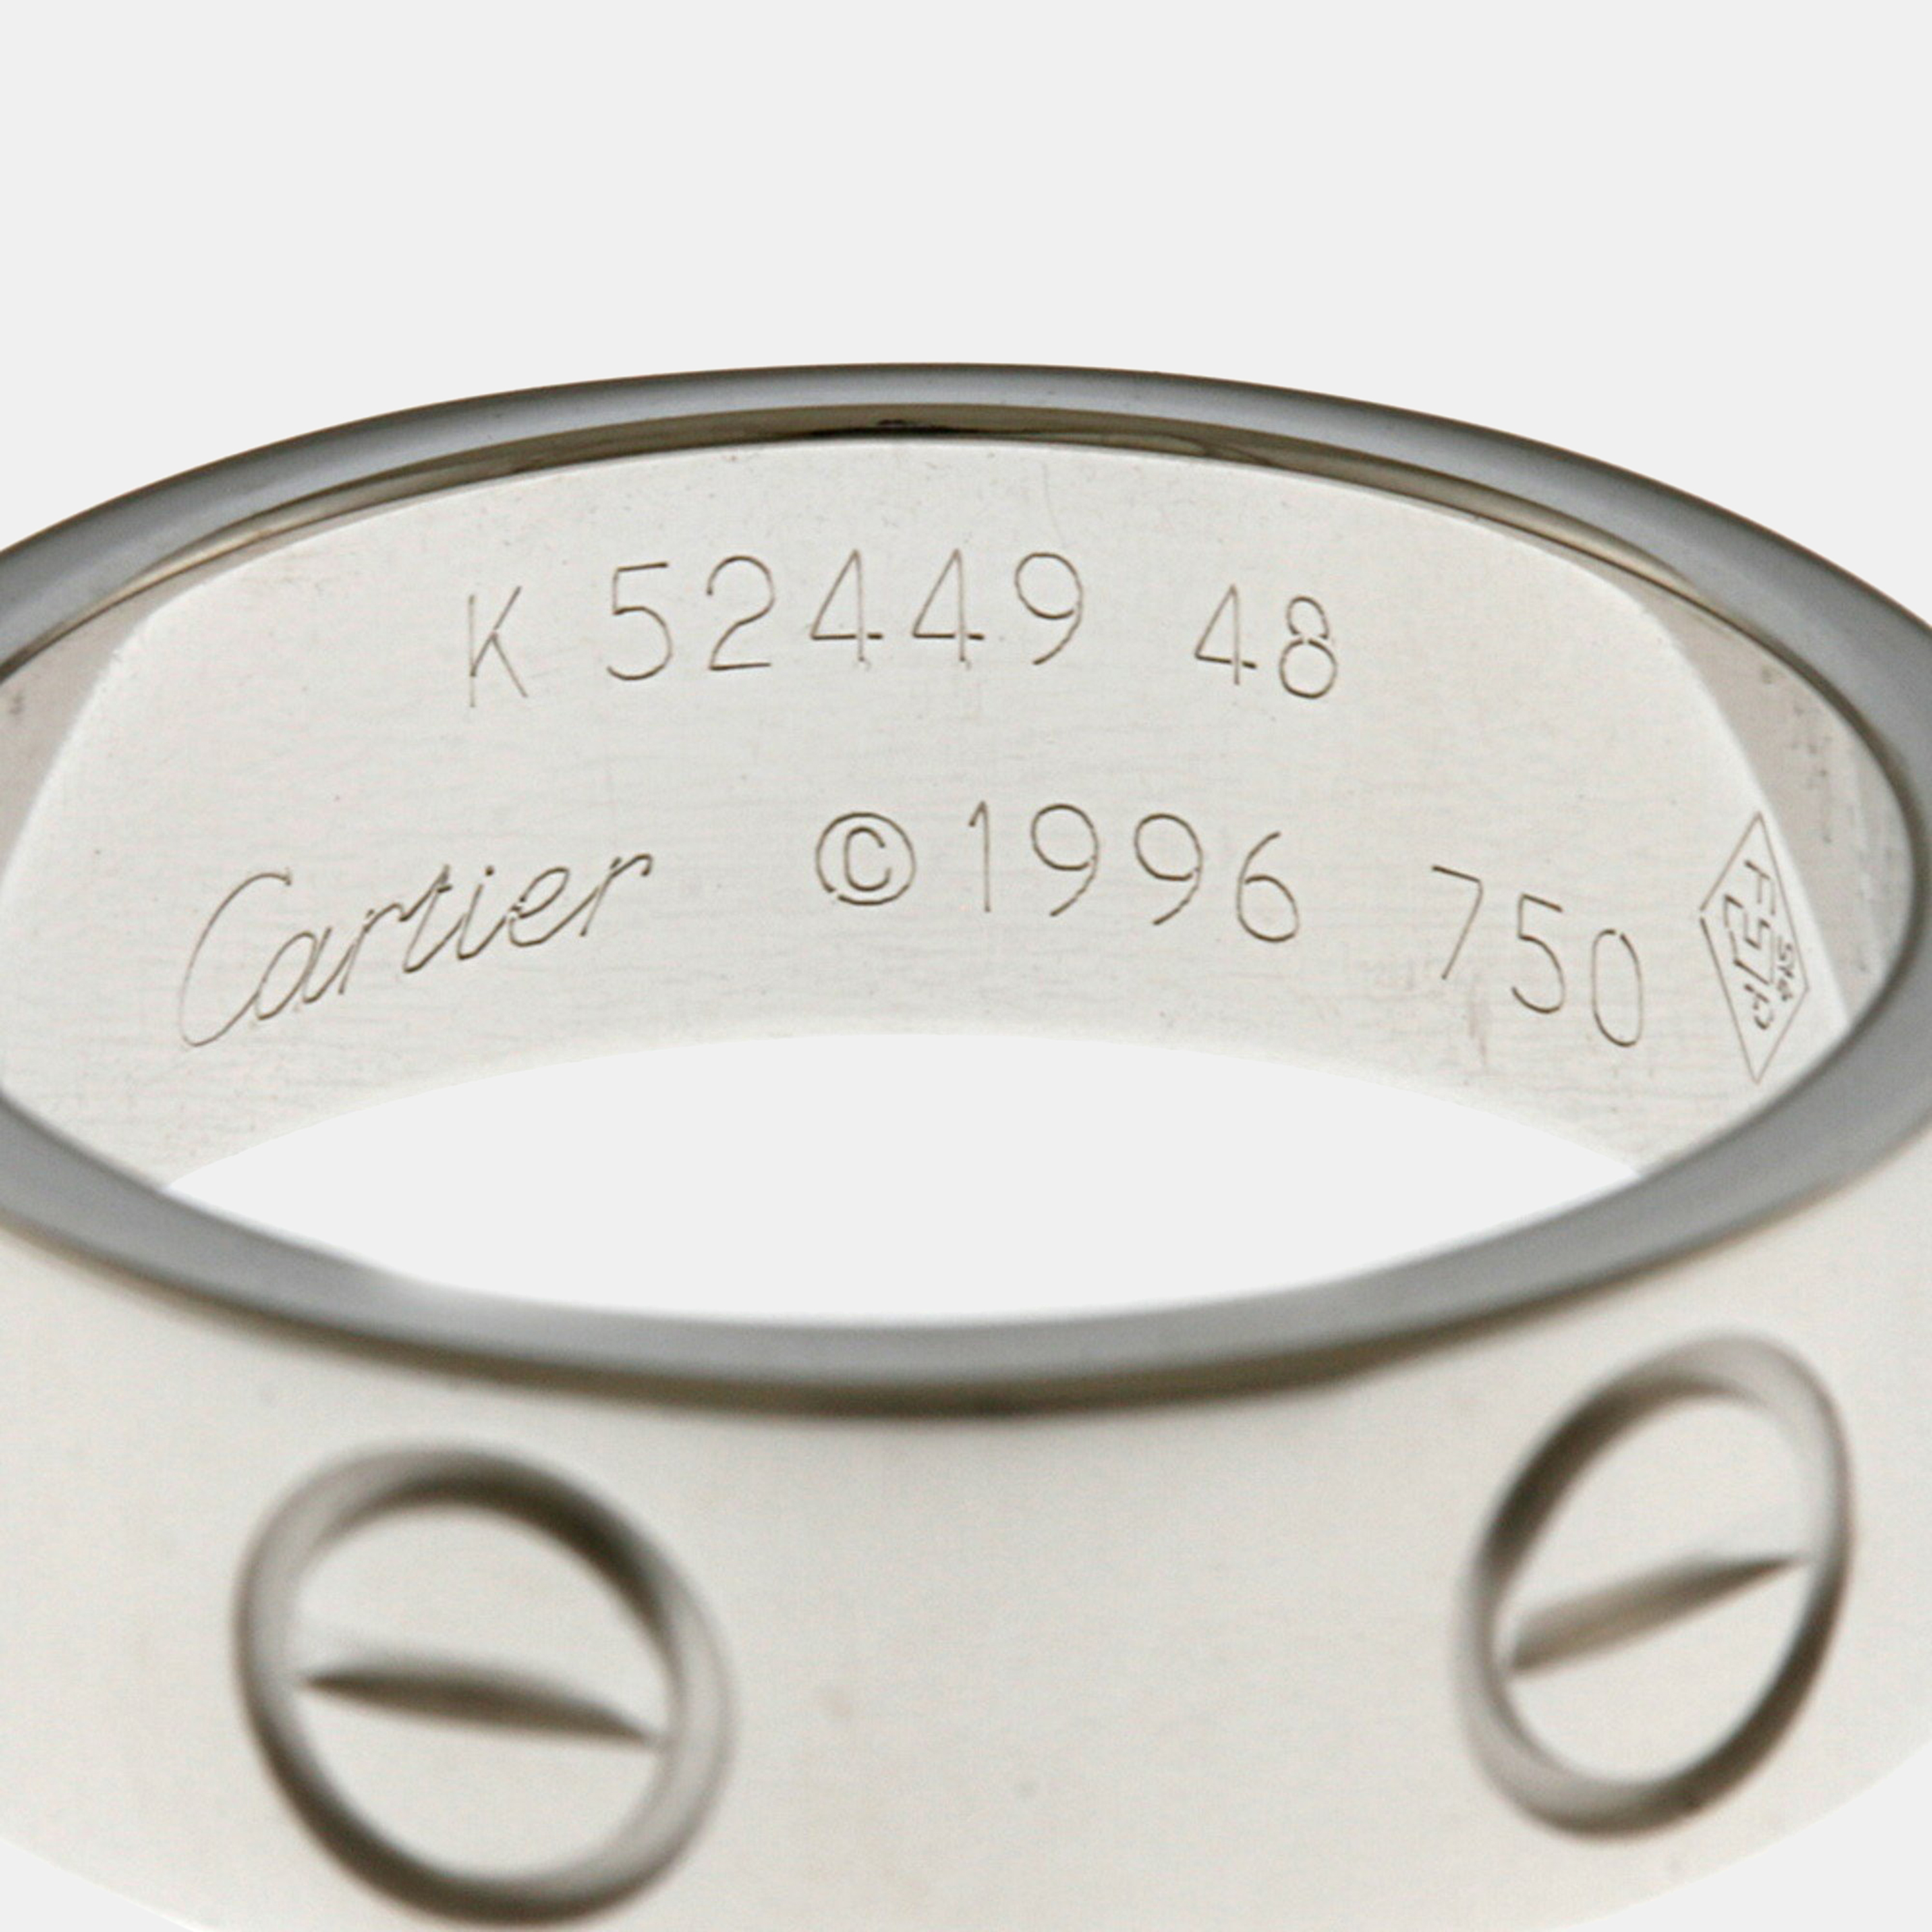 Cartier 18K White Gold Love Band Ring EU 48